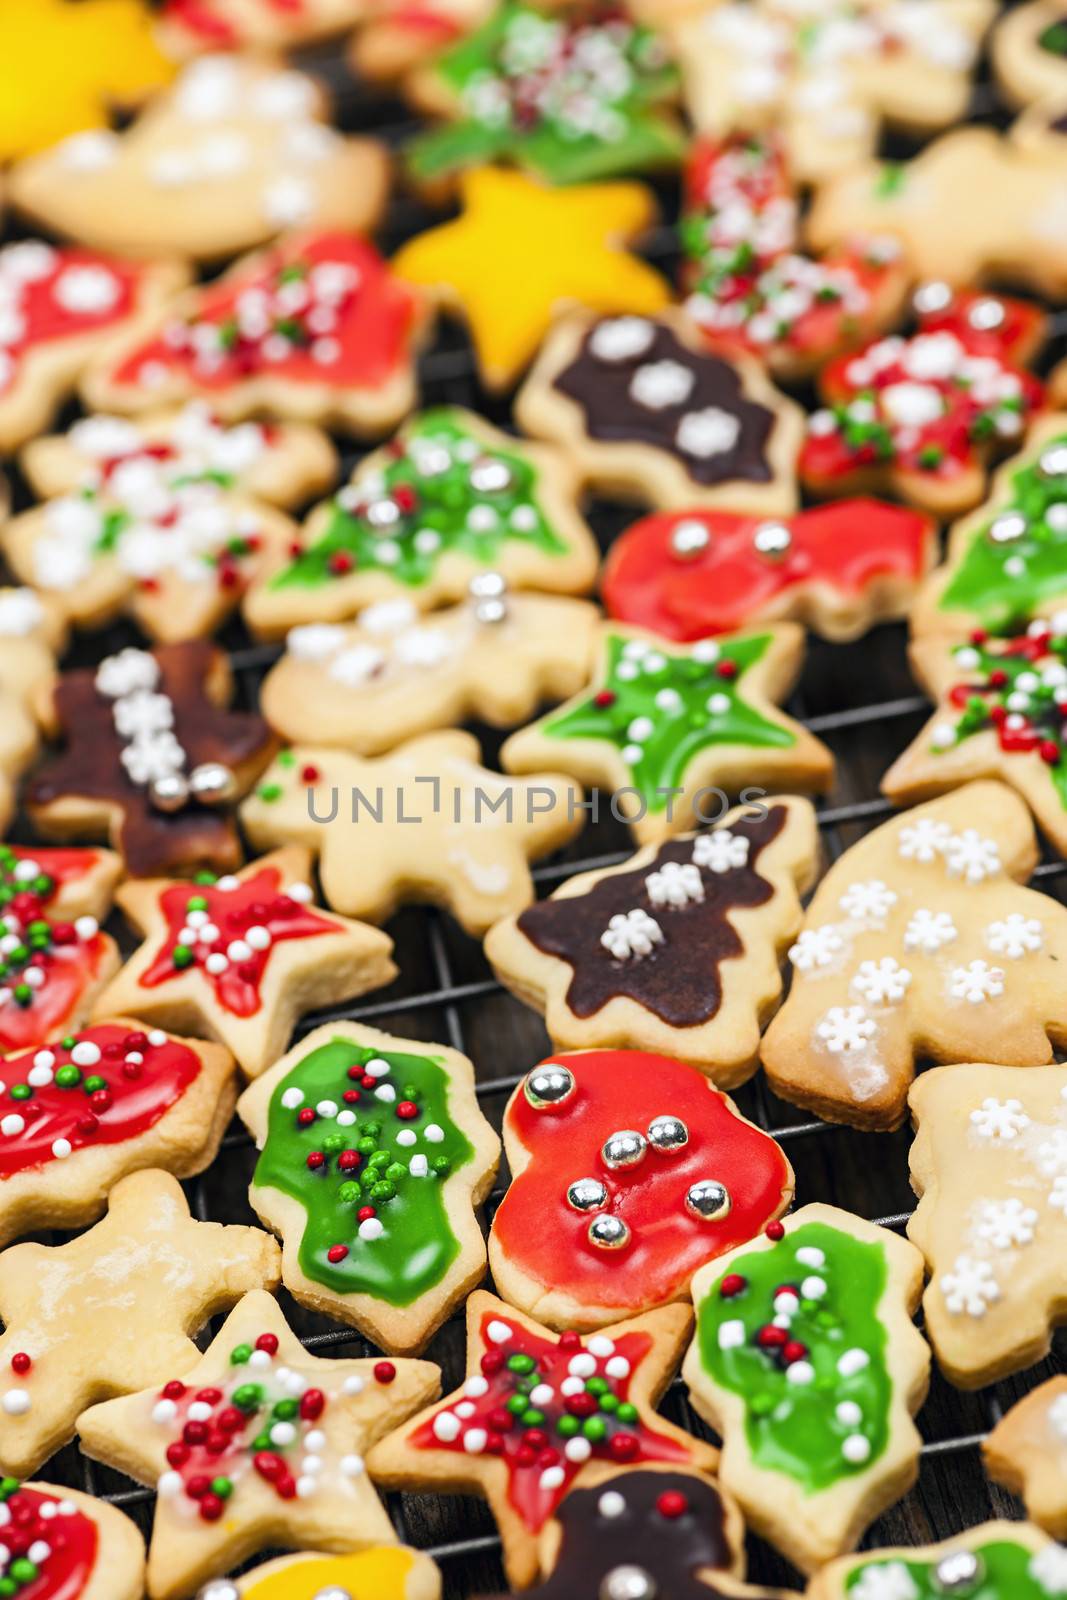 Homemade Christmas cookies by elenathewise